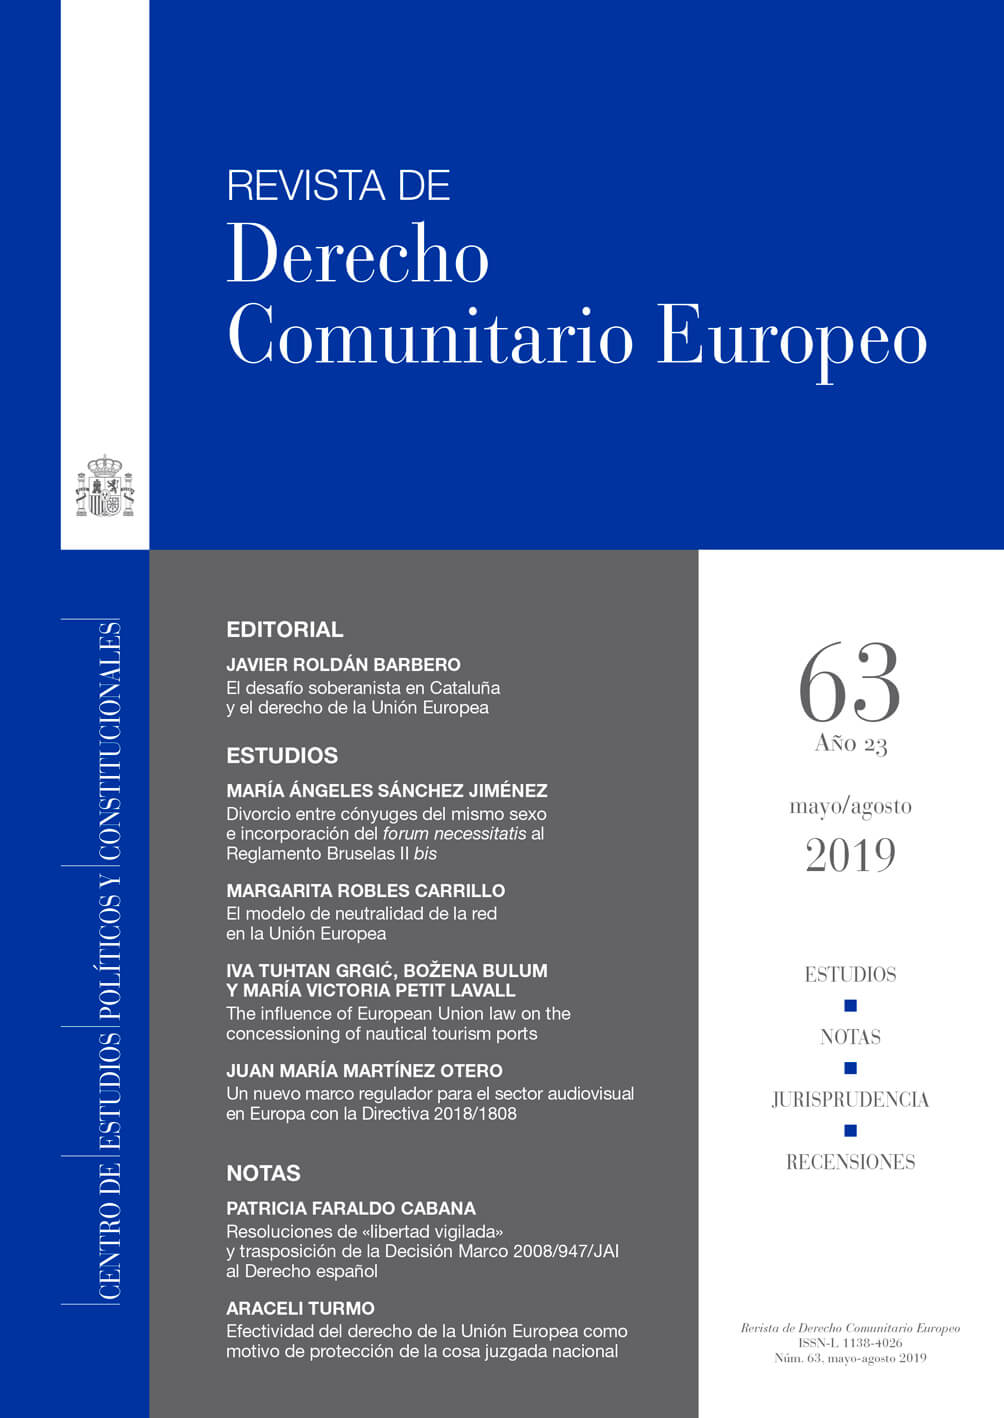 Revista de Derecho Comunitario Europeo - número 63, Mayo/Agosto 2019